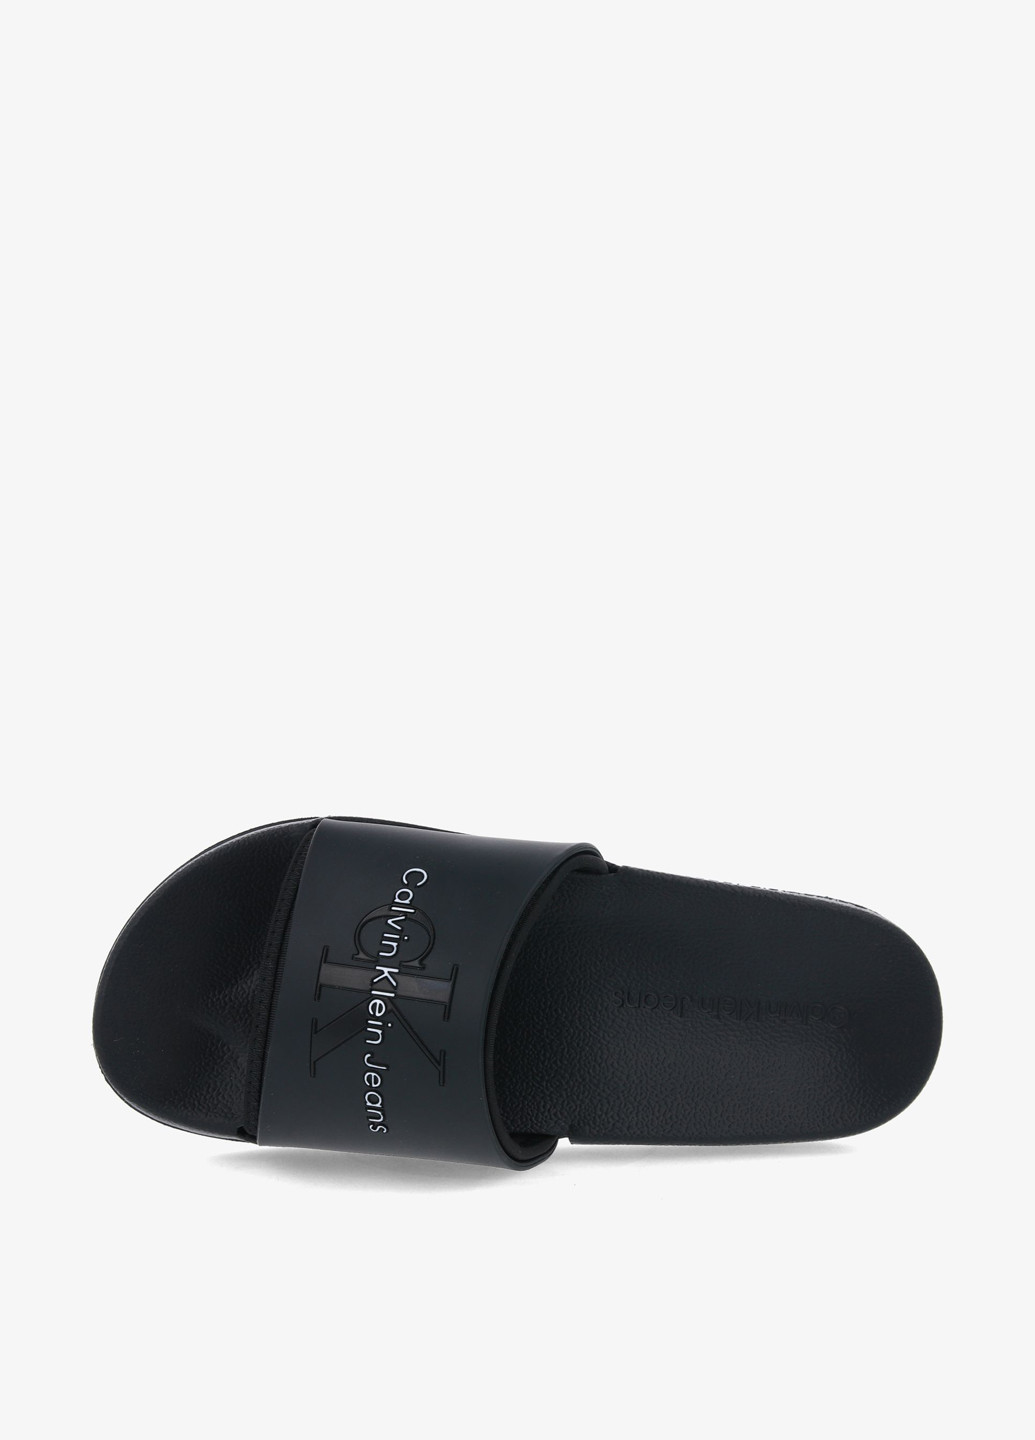 Черные шлепанцы Calvin Klein с тиснением